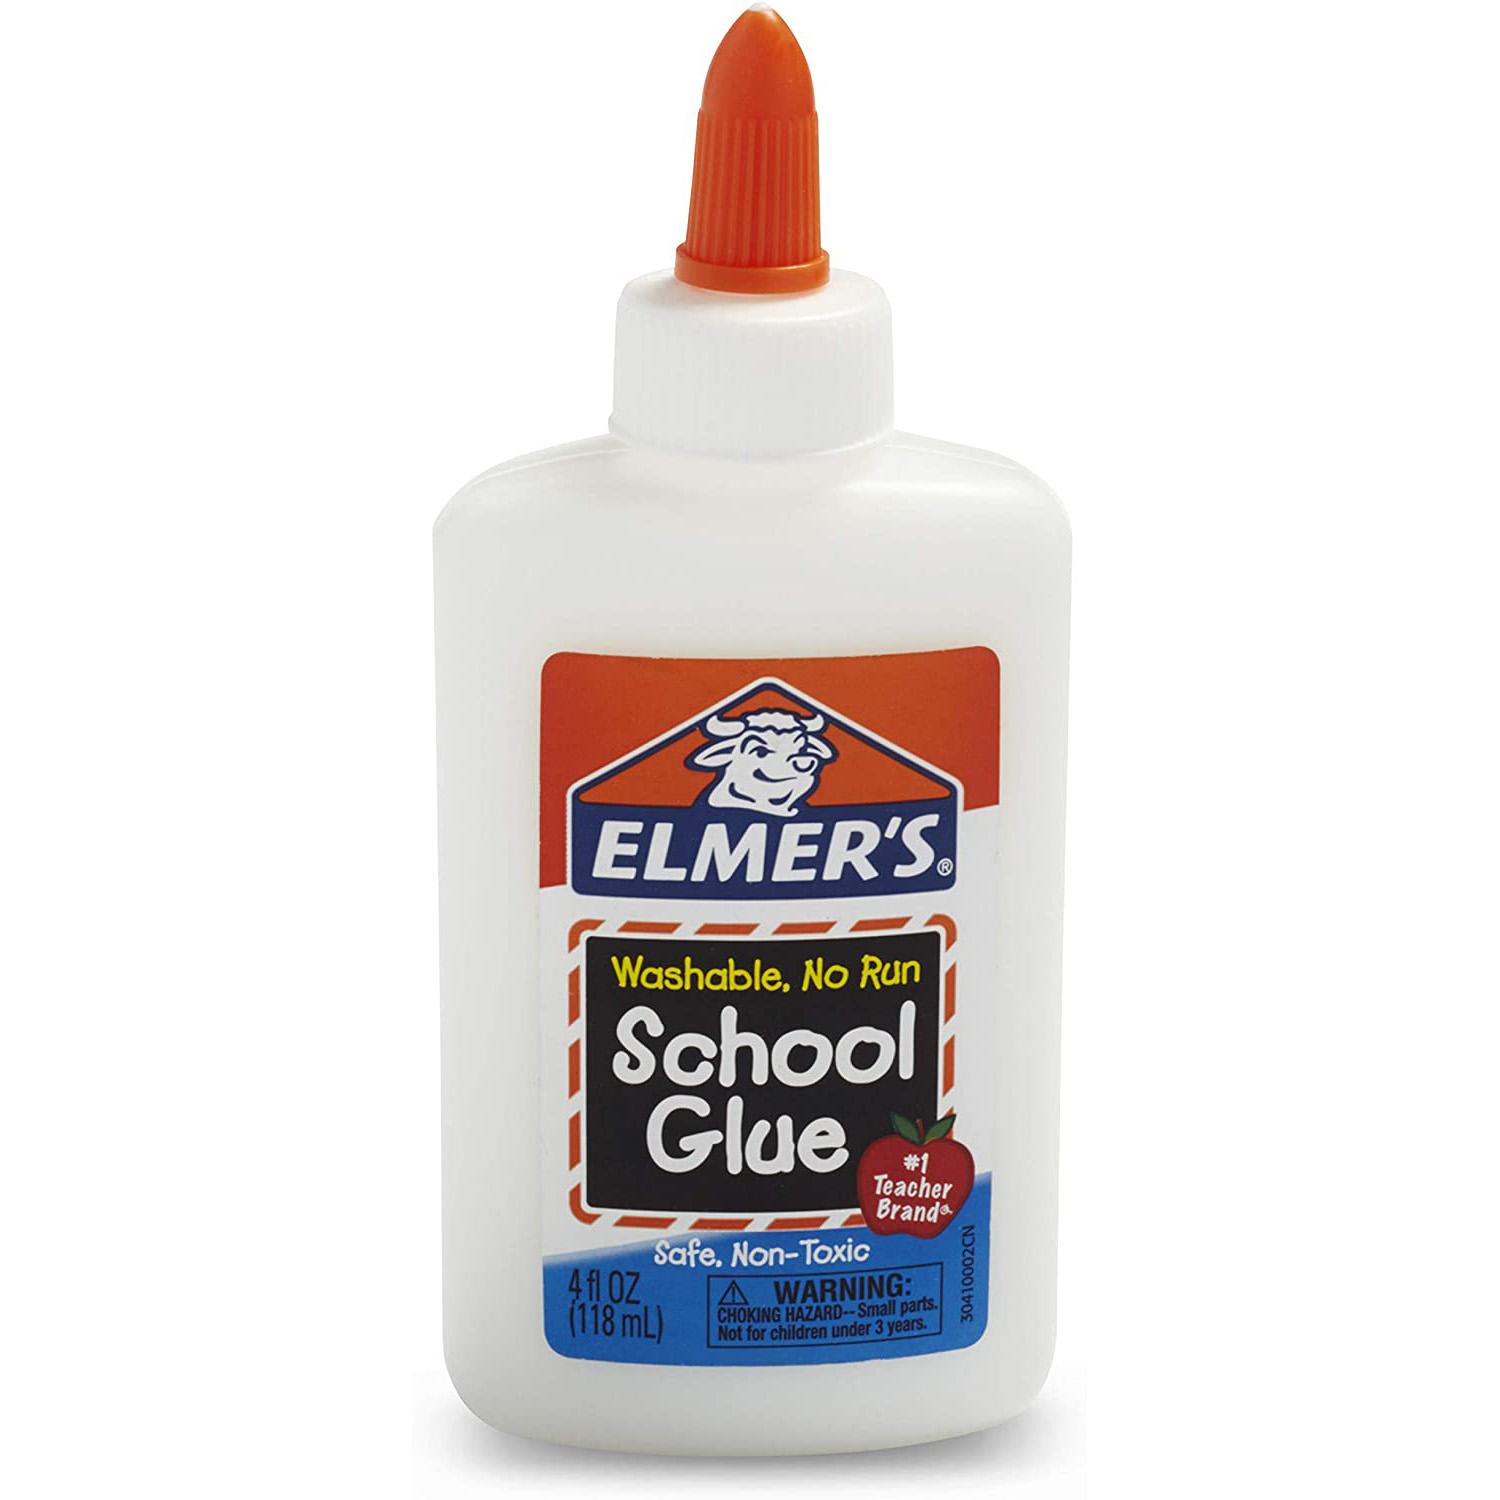 Elmers Liquid Washable School Glue for $0.50